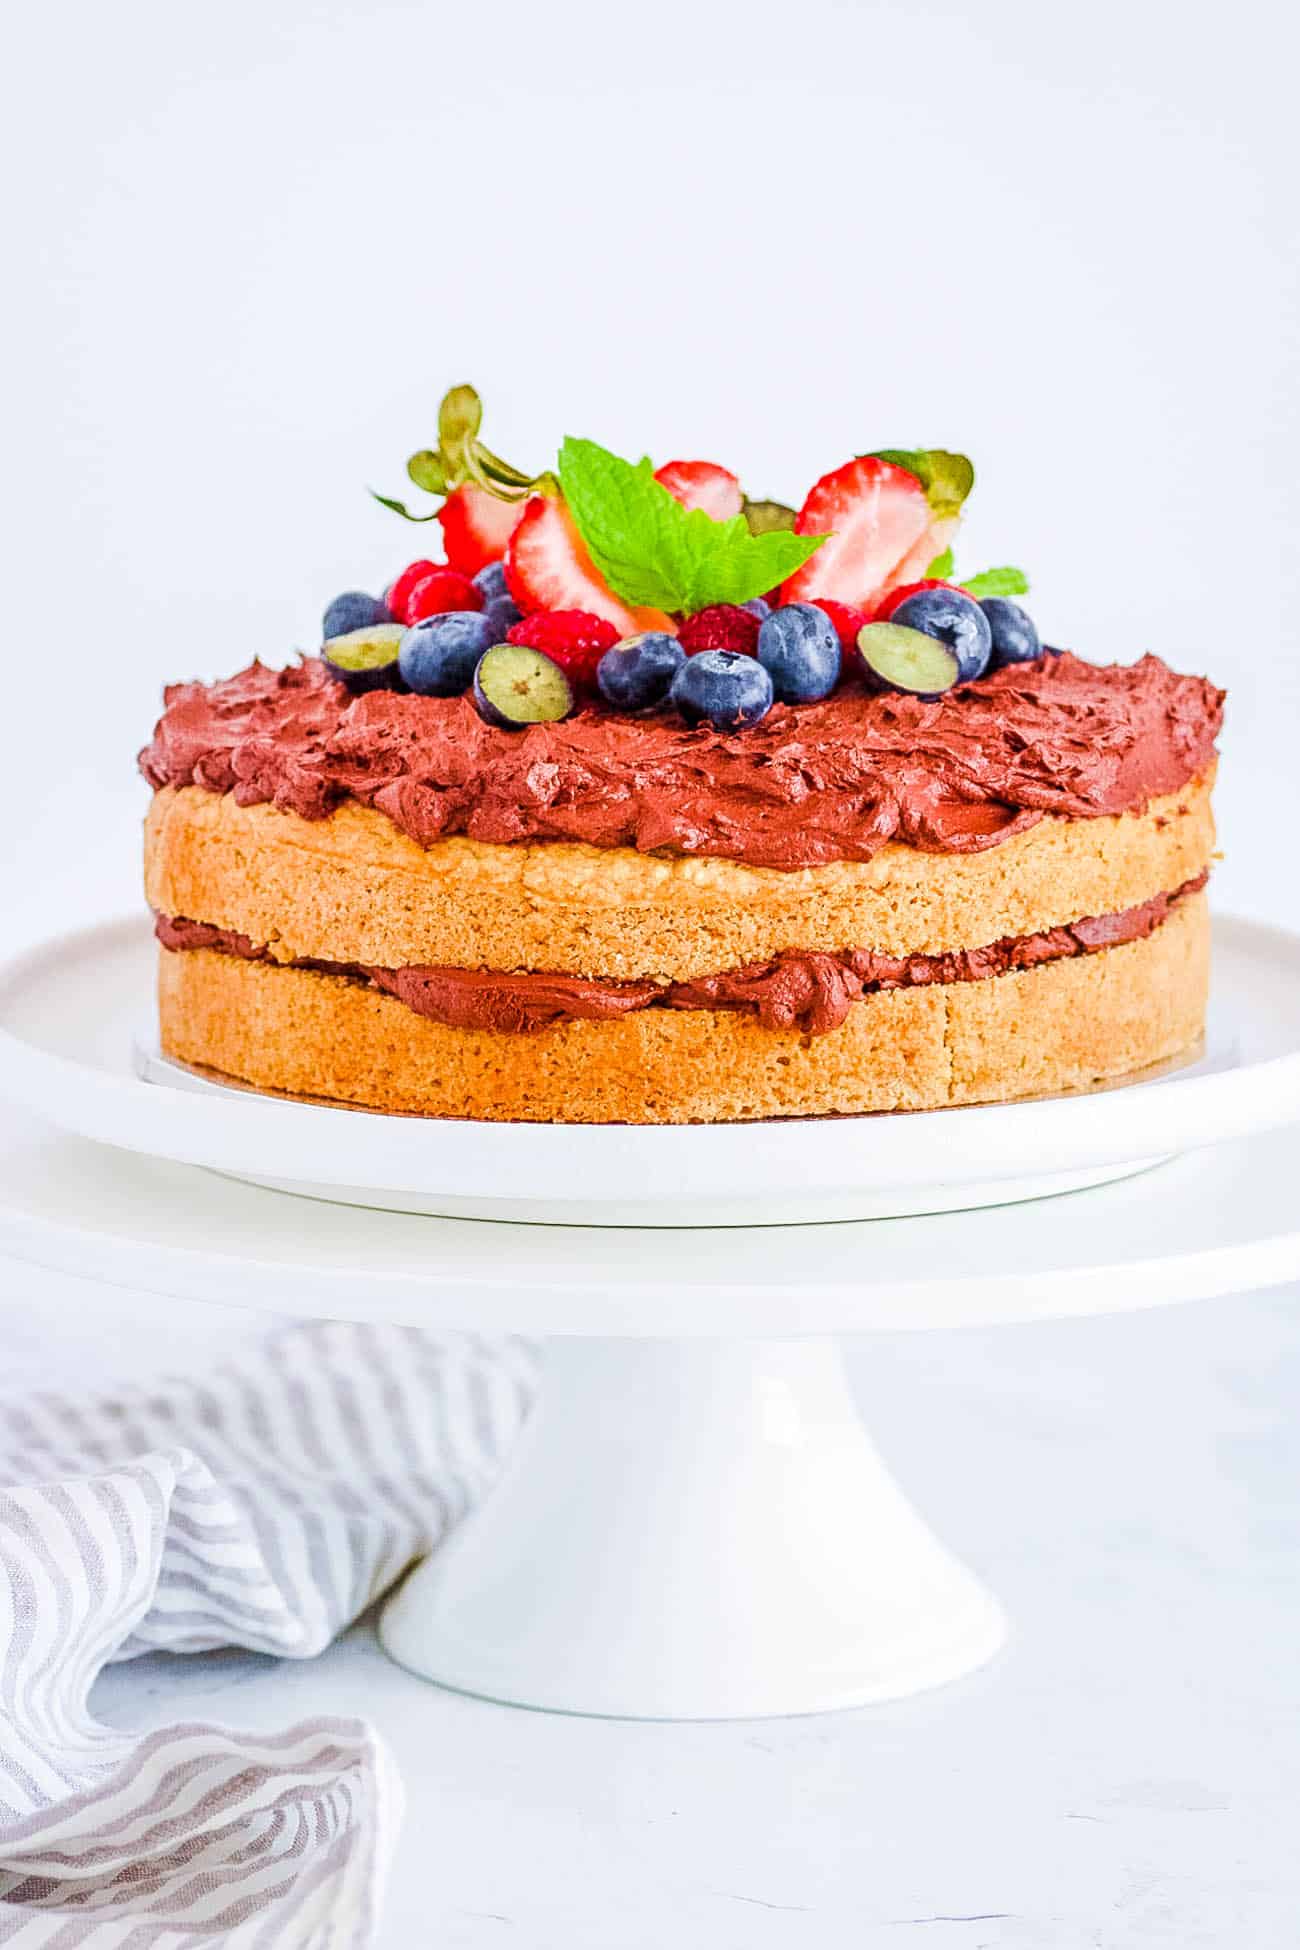 easy, healthy, gluten free, vegan oat flour cake recipe on a cake stand